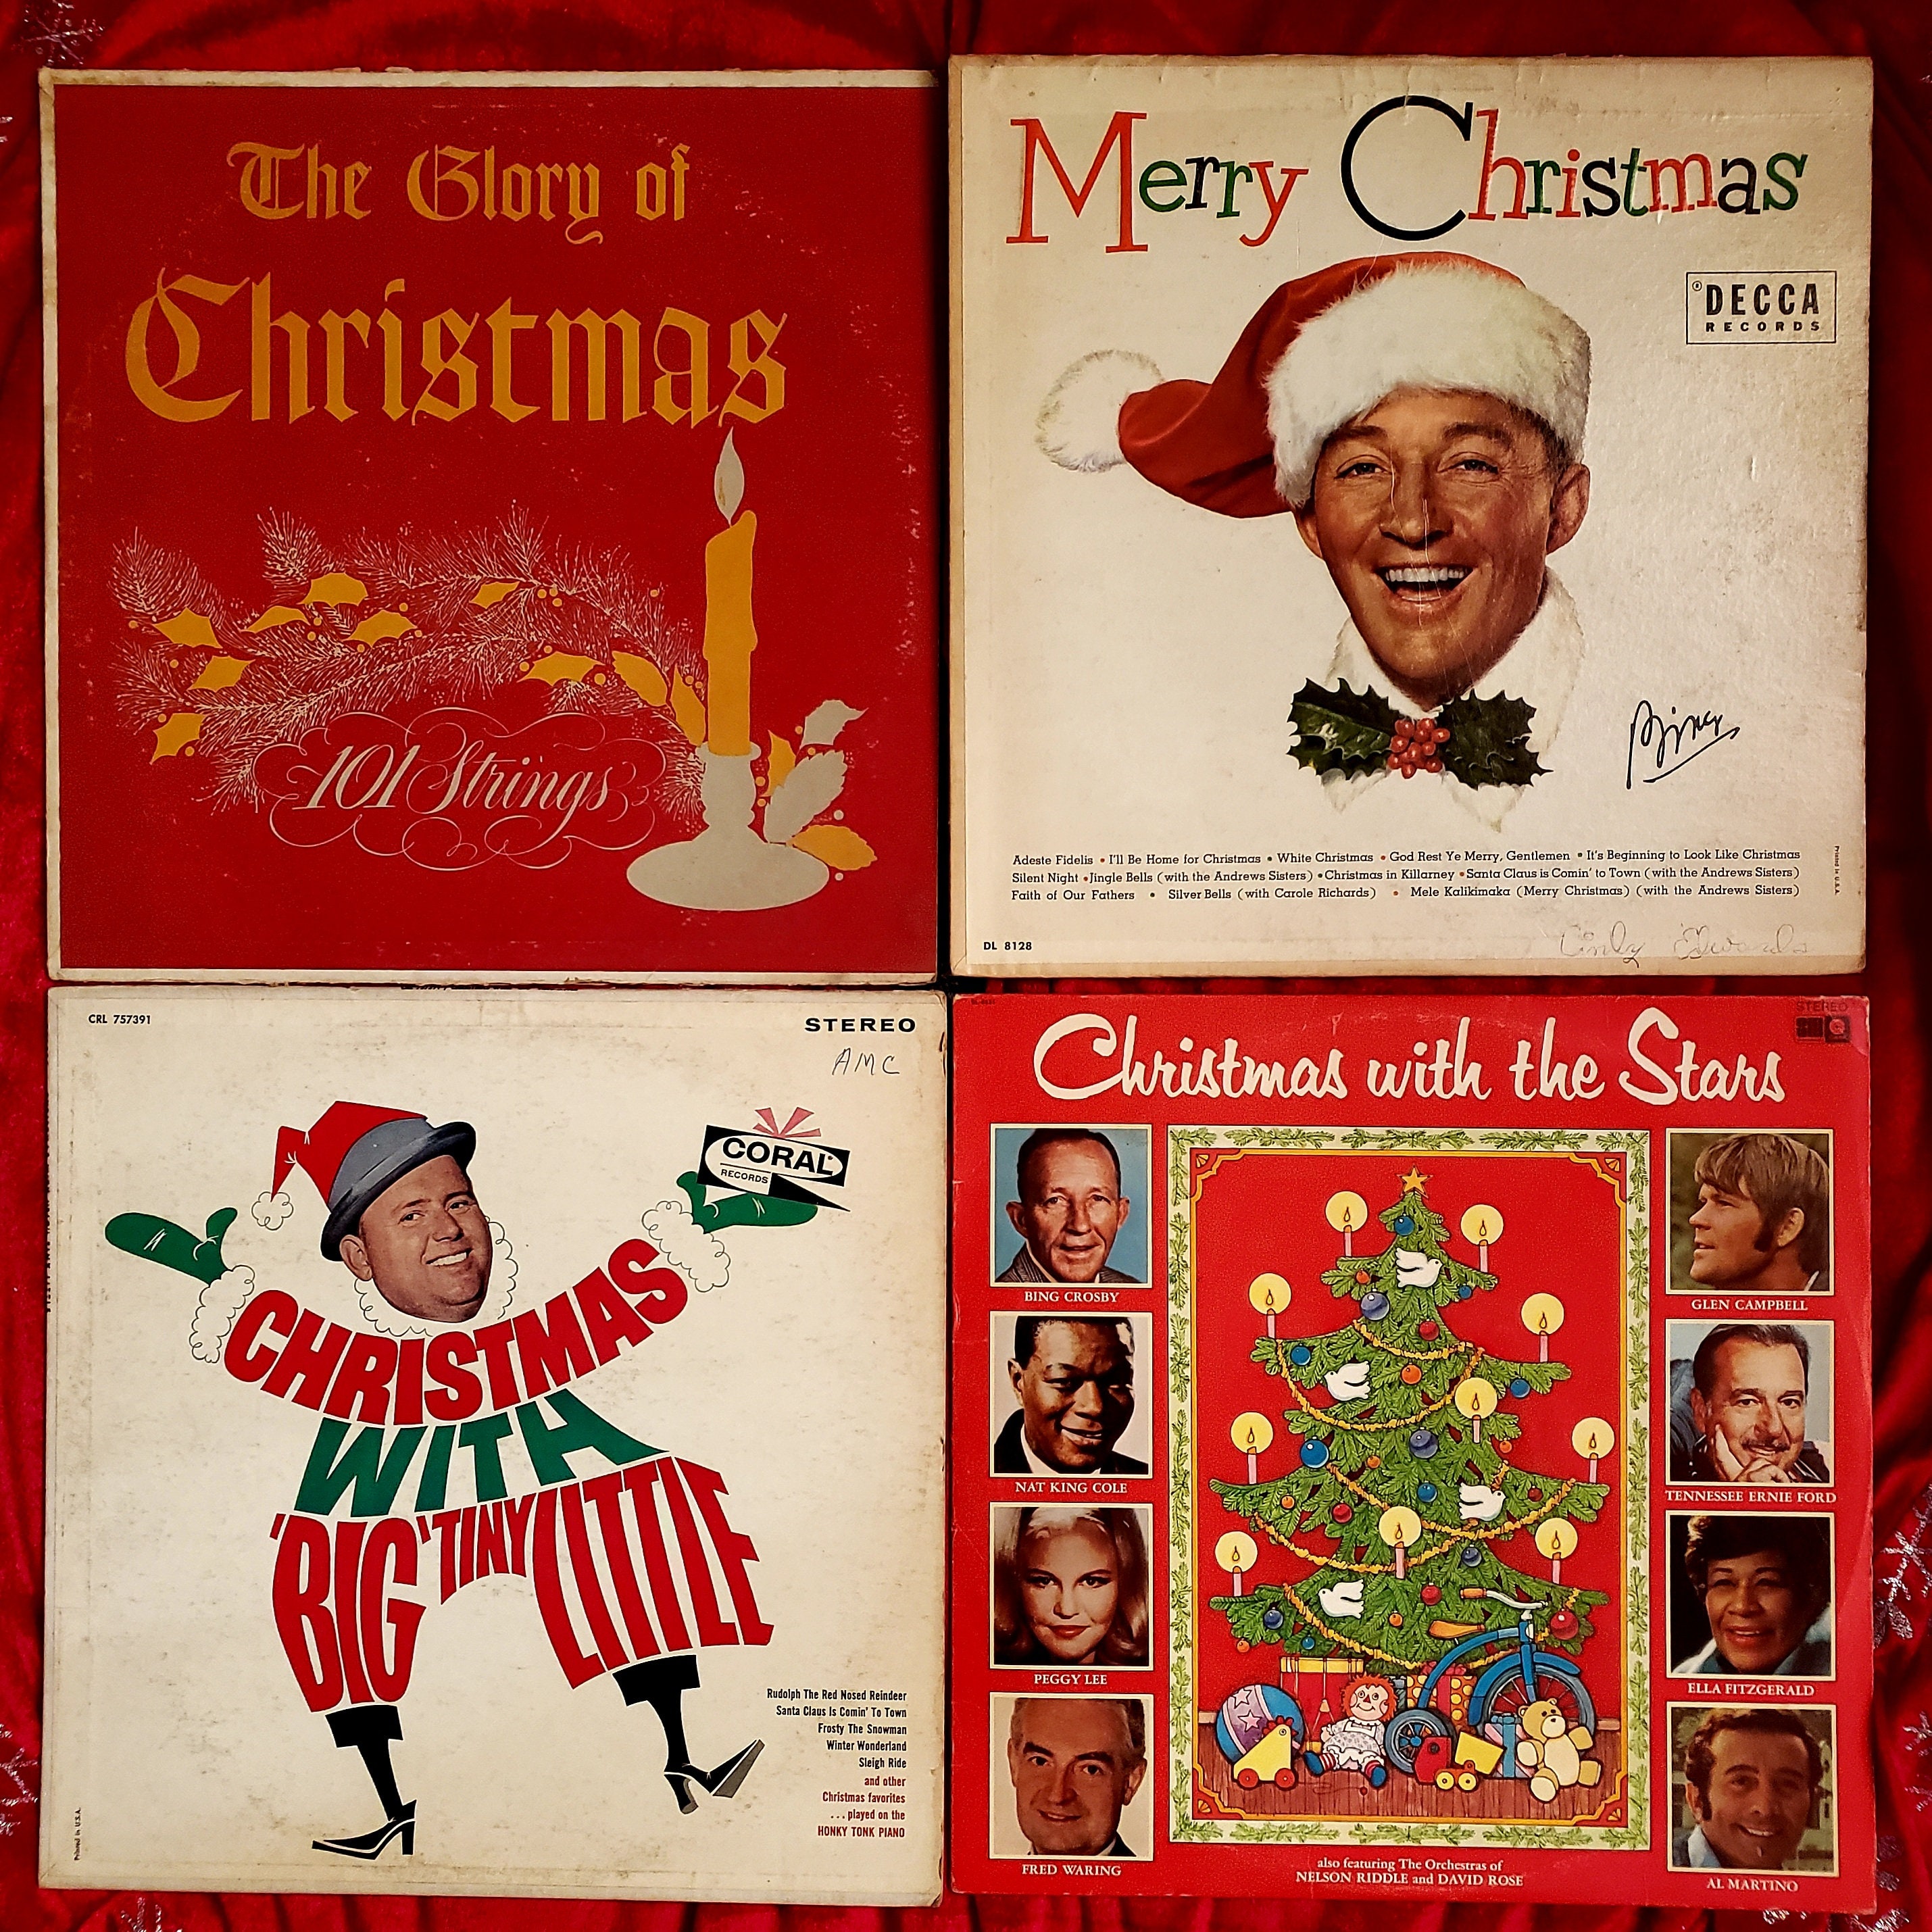 Vintage Christmas Album Covers: Random Lot for Crafting, DIY, Home Décor no  Vinyl Included 